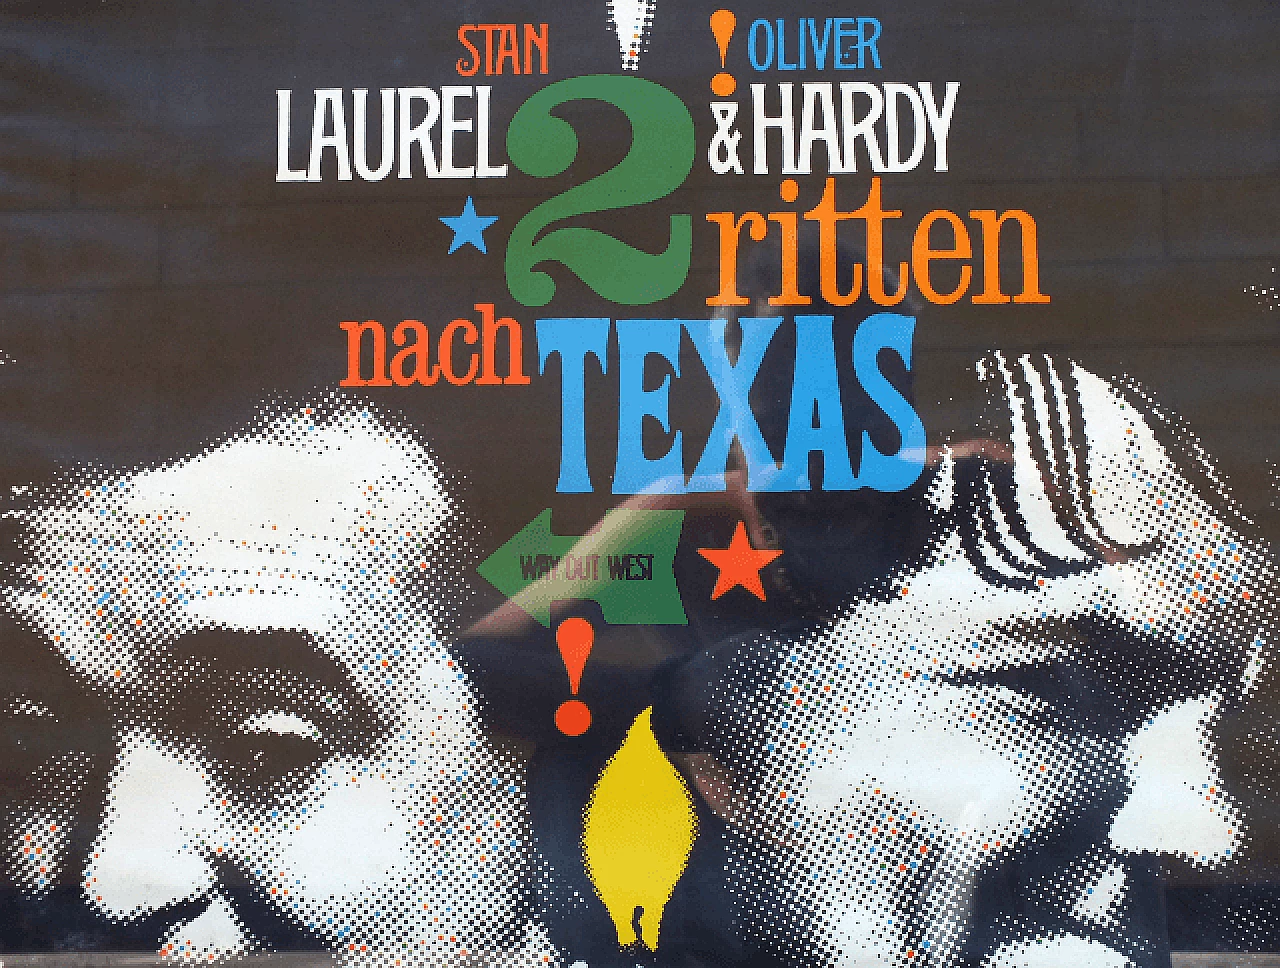 Manifesto cinematografico di Laurel & Hardy - Zwei ritten nach Texas, anni '60 1